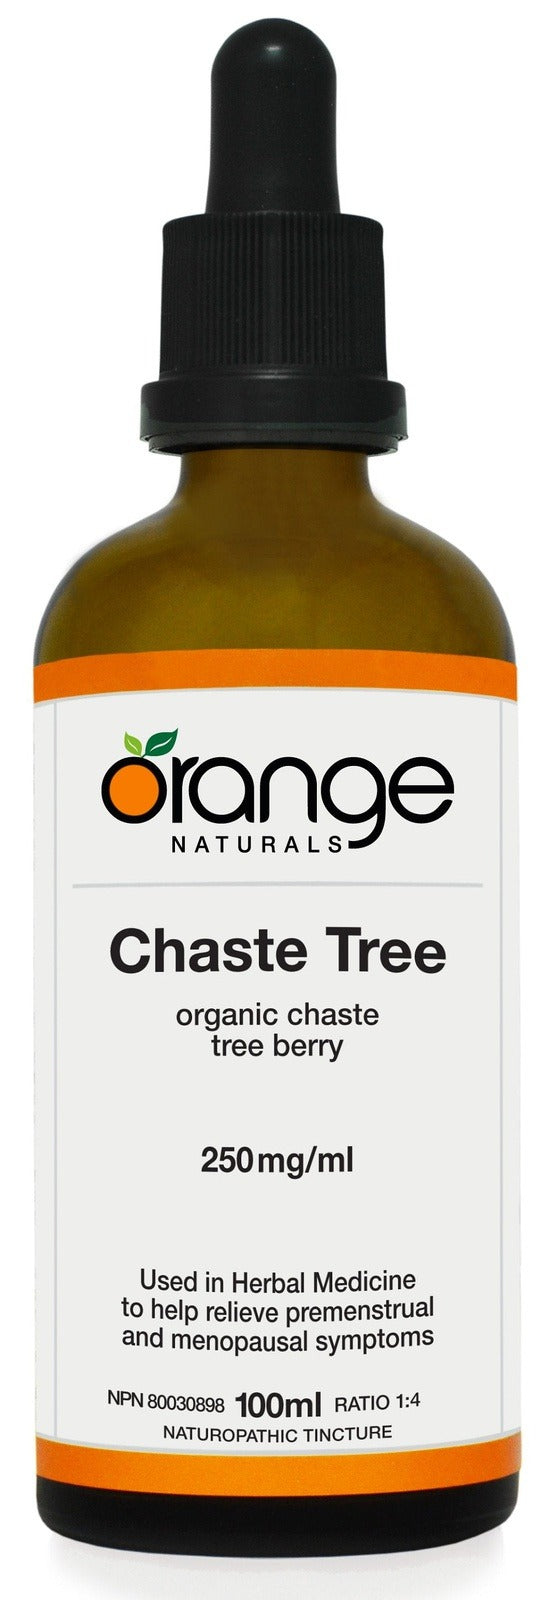 Orange Naturals Chaste Tree 250 mg/mL 100 mL Image 1